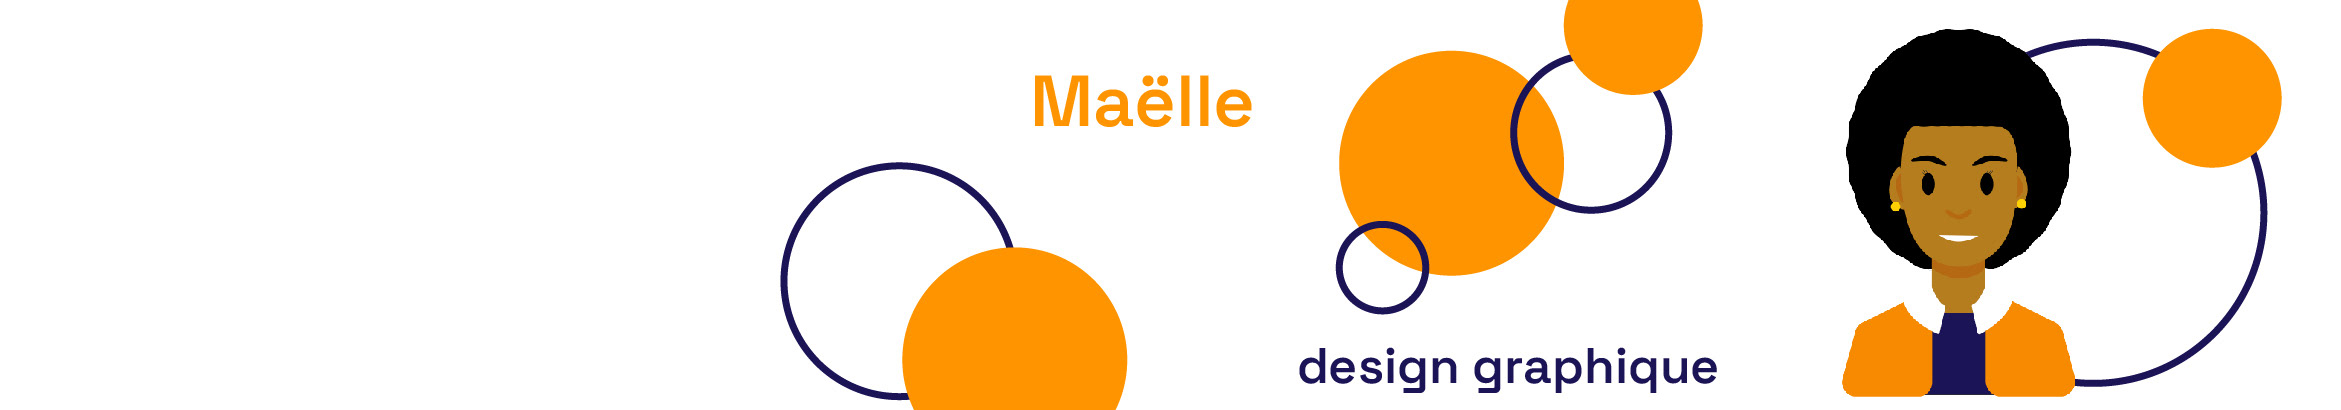 Maelle ROULIS のプロファイルバナー